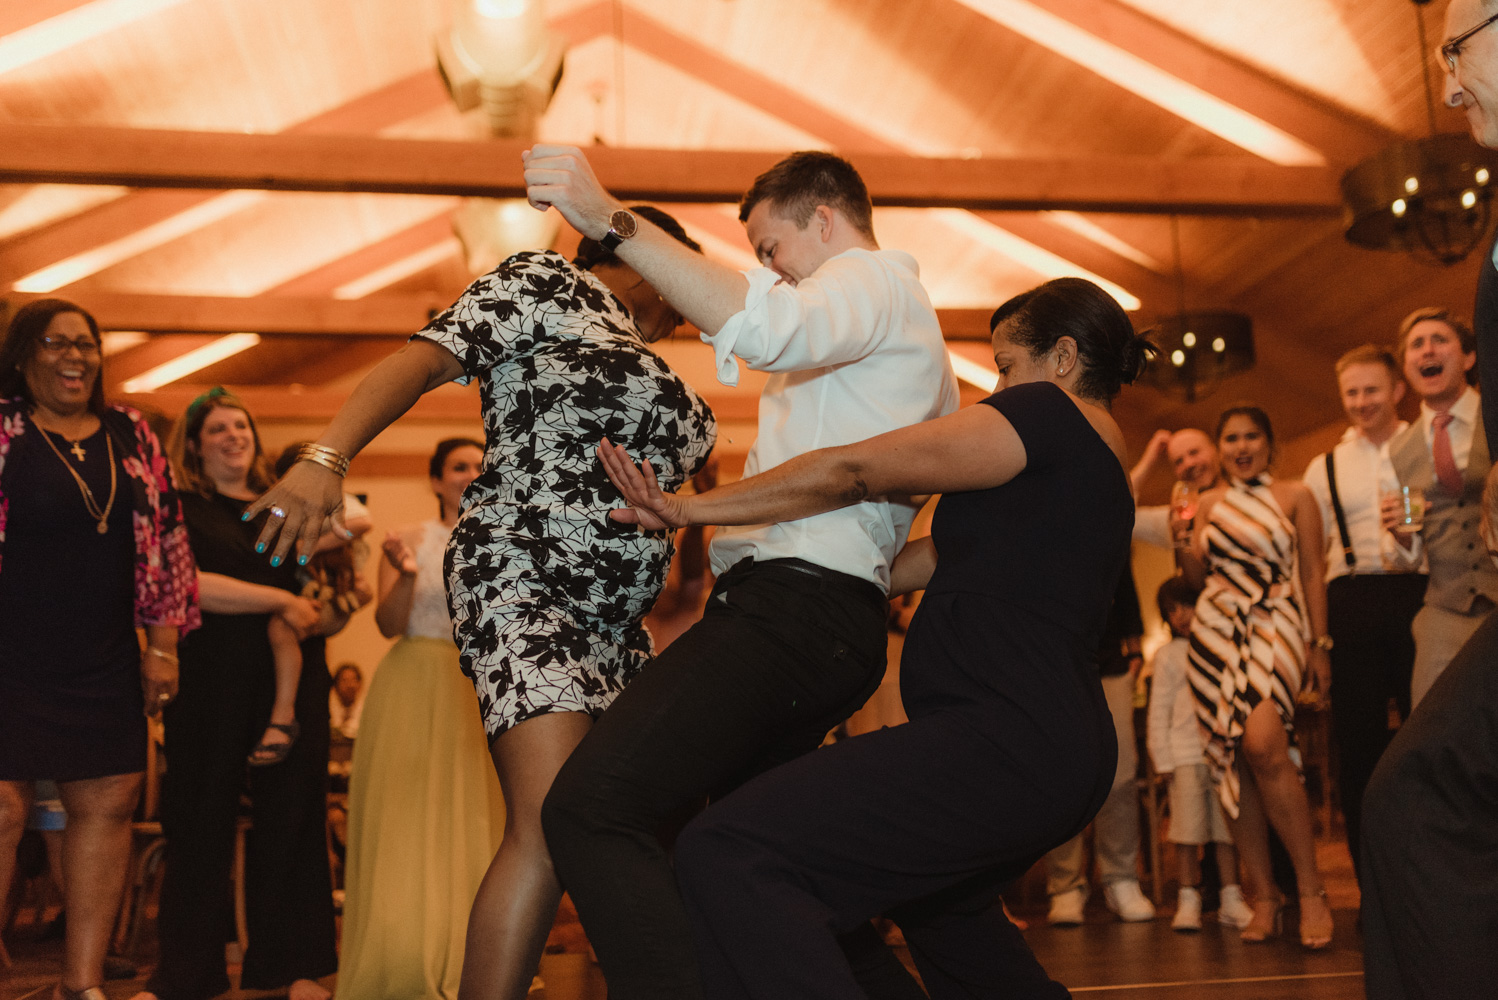 Rush Creek Lodge wedding, dance party photo